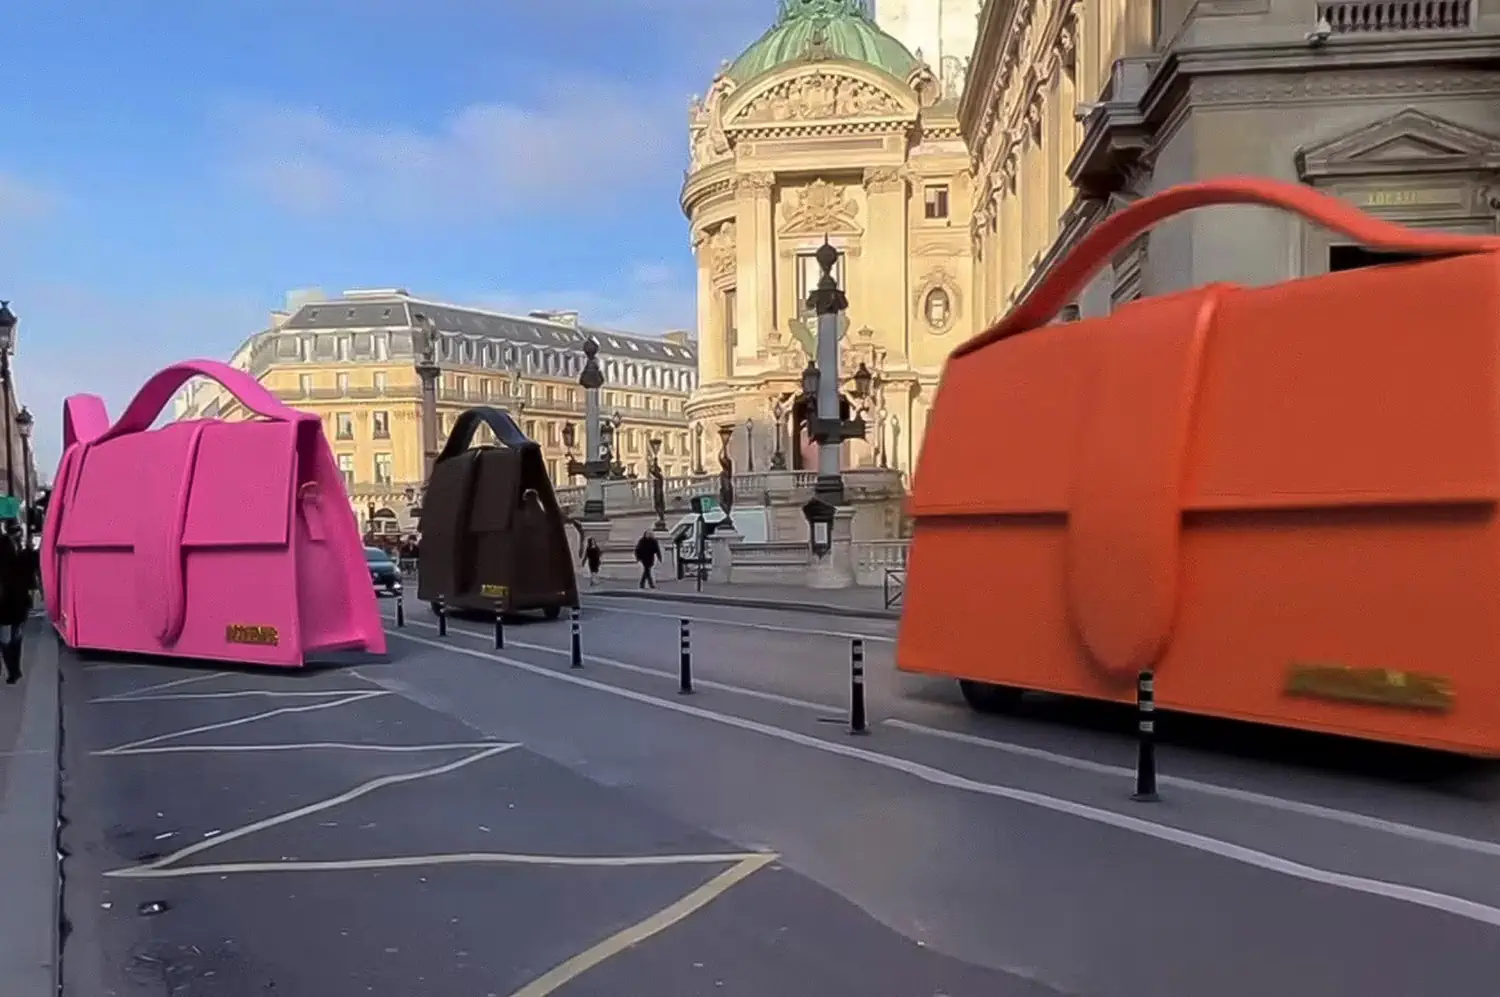 Jacquemus Le Bambino bags command the Parisian streetscape